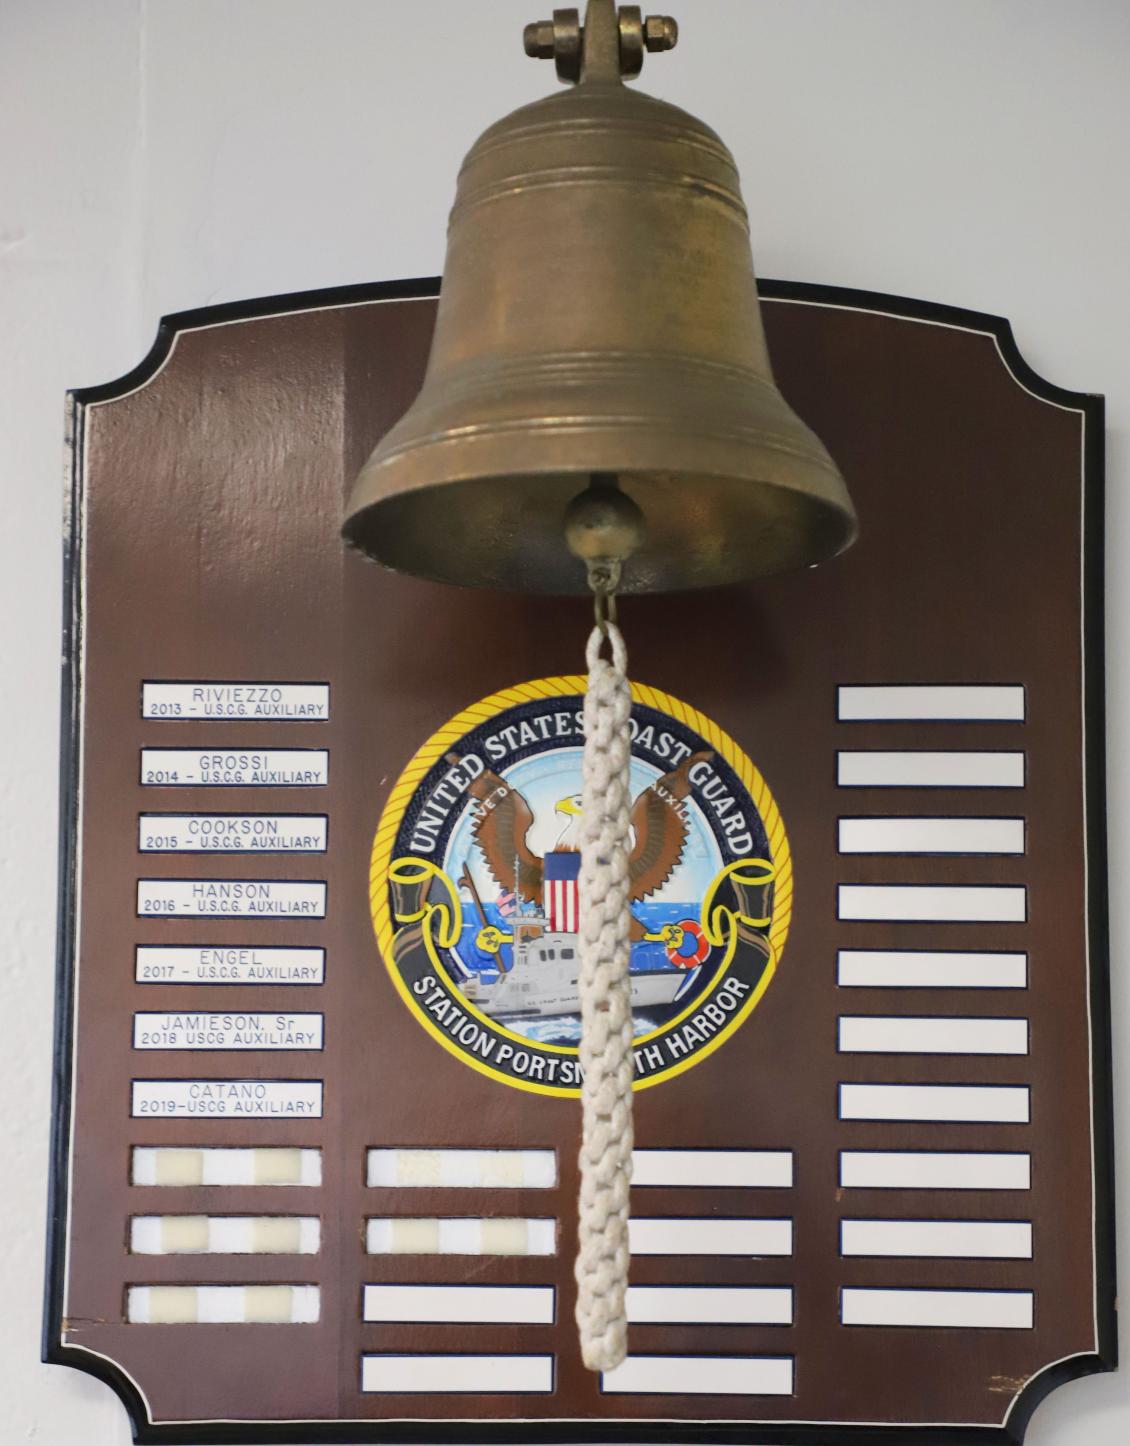 Portsmouth Harbor Coast Guard Station, New Castle New Hampshire - USCG Auxiliary Award Plaque